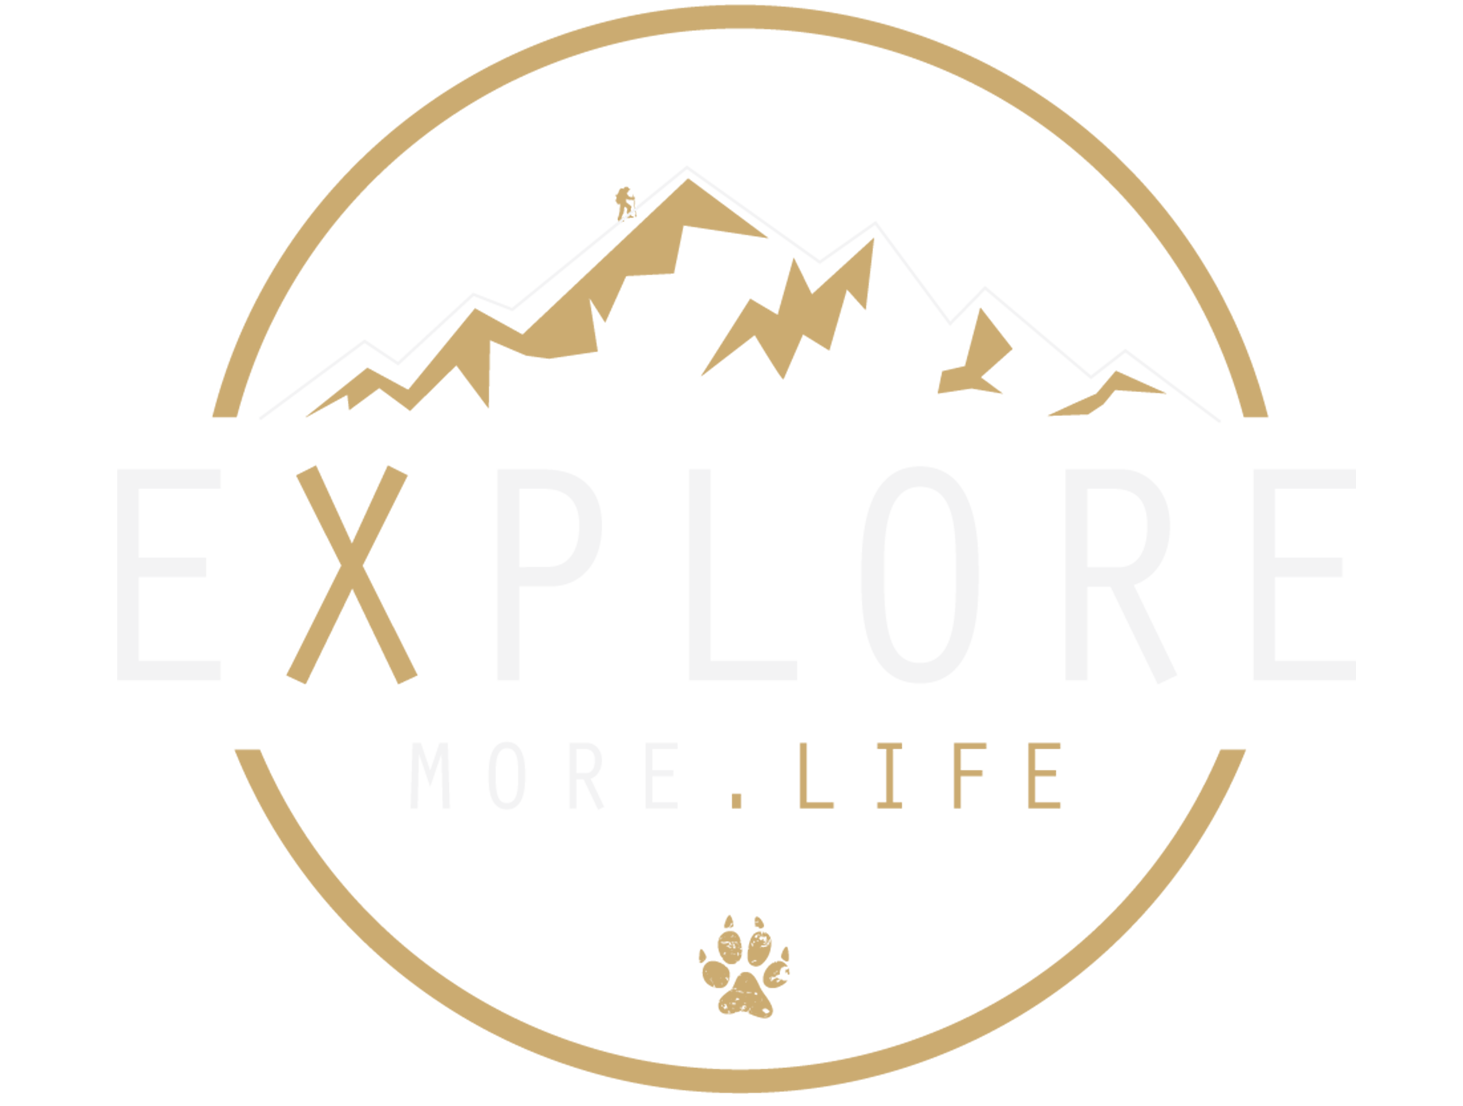 Explore More Life | Travel Lifestyle Blog